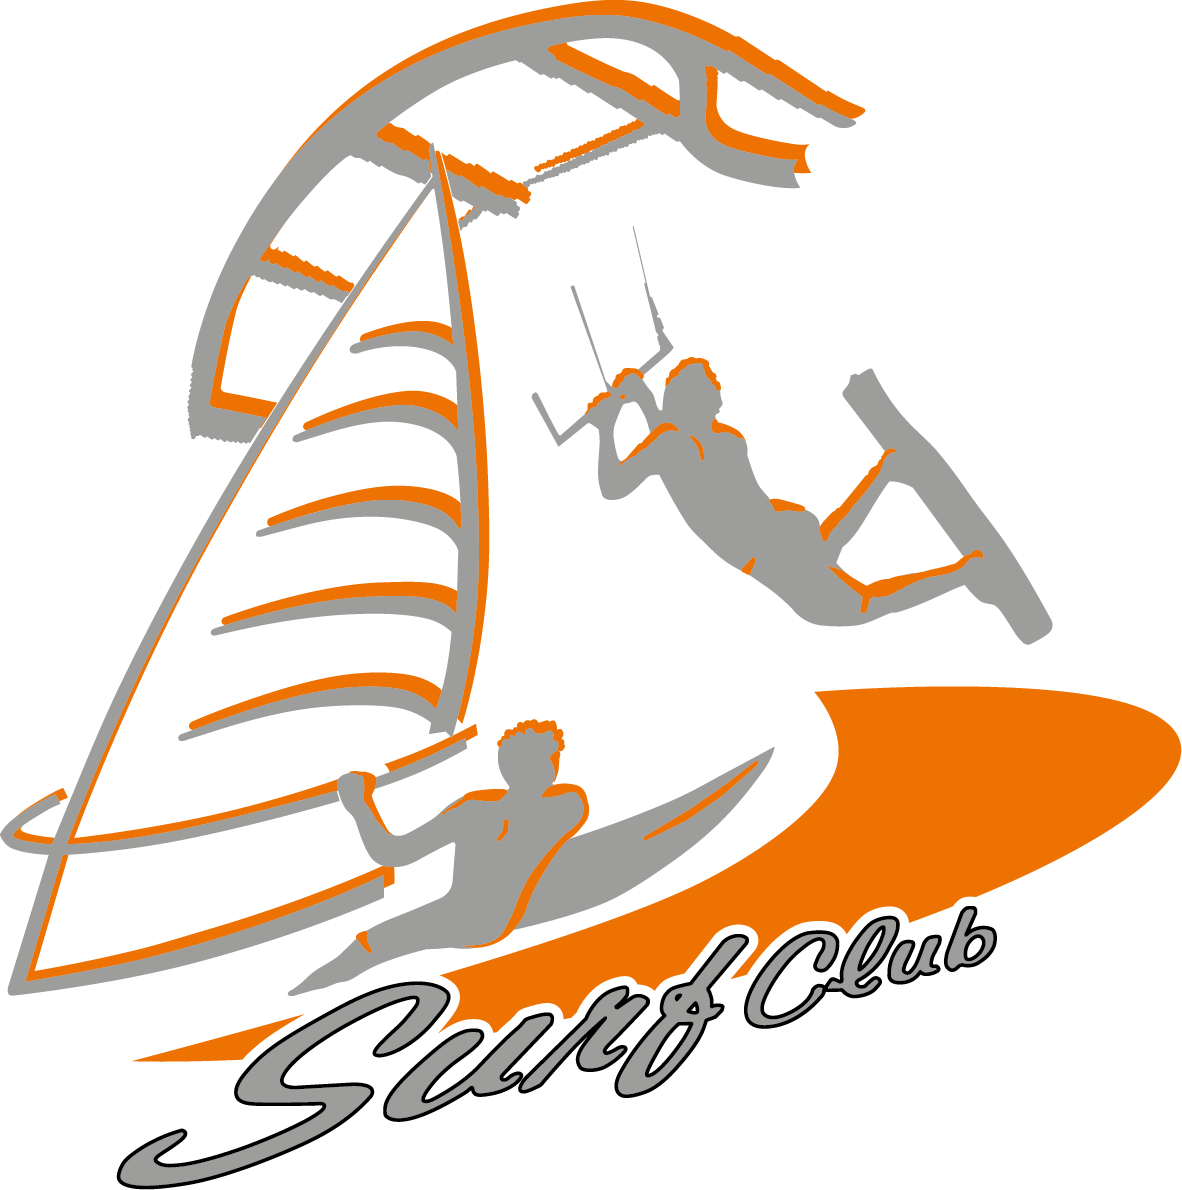 SURFCLUB Gerabronn Logo